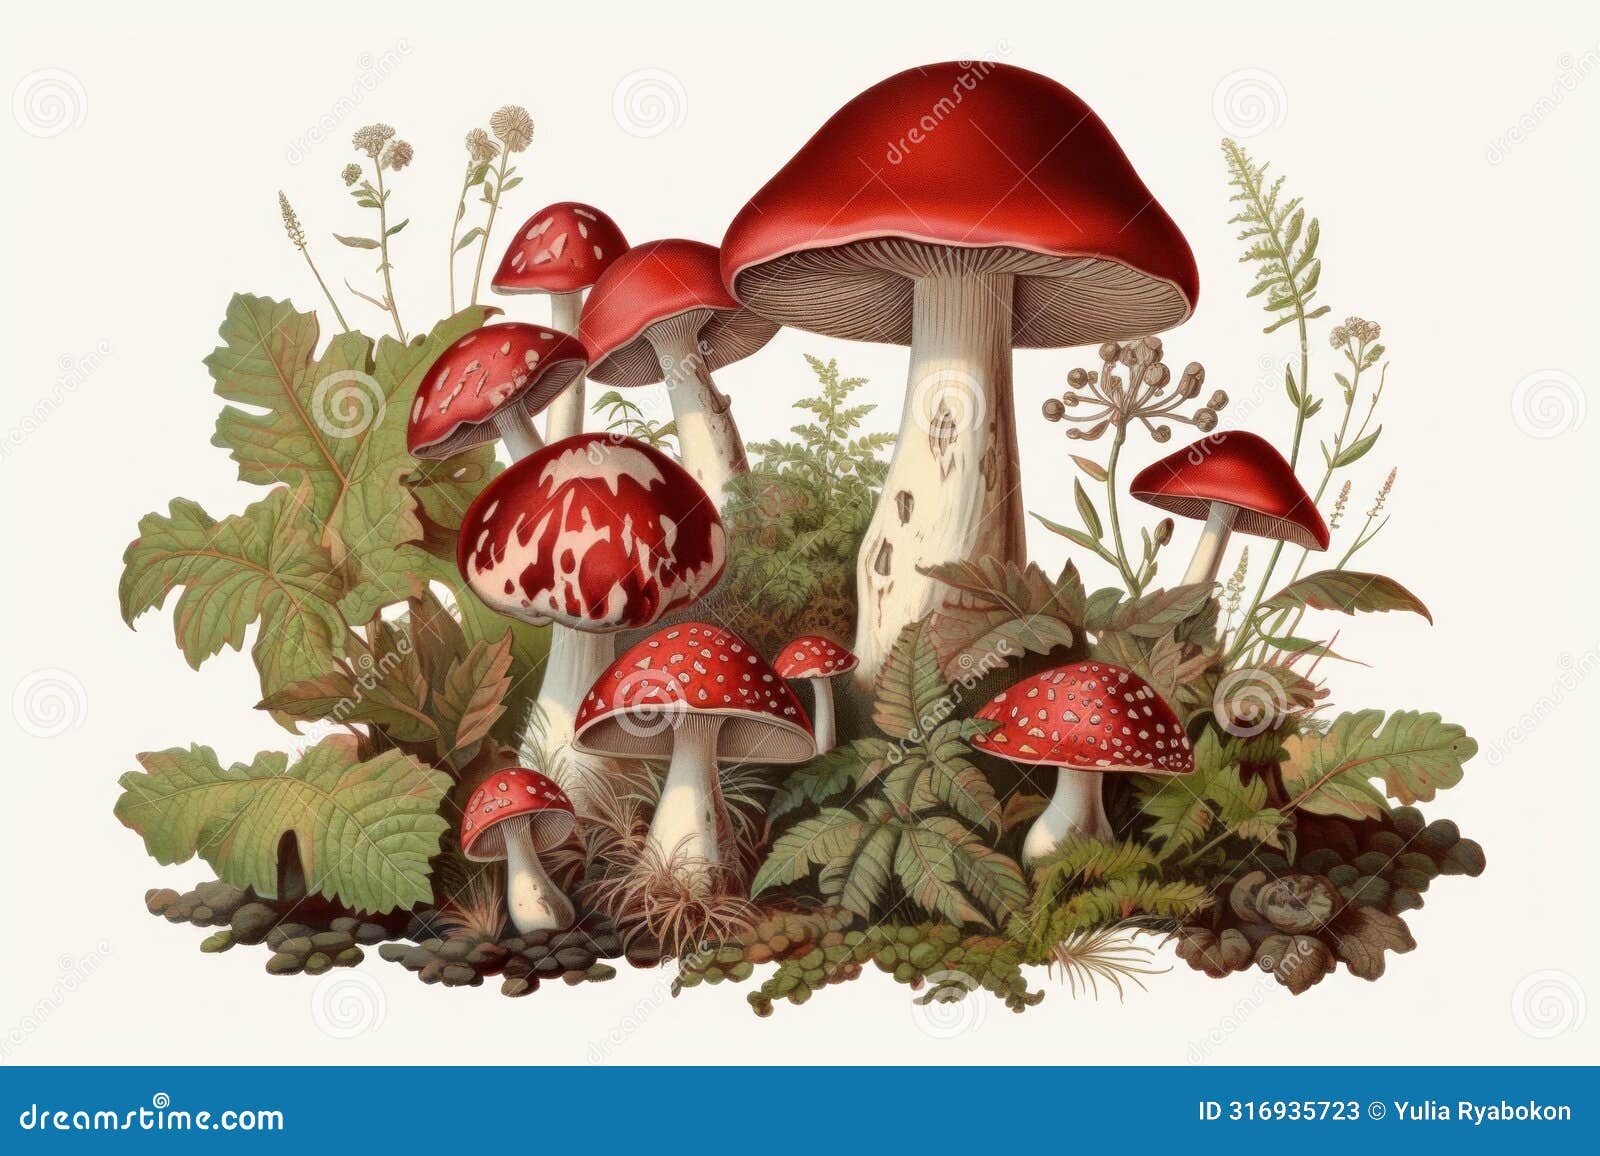 lifelike mushroom natural plant . generate ai